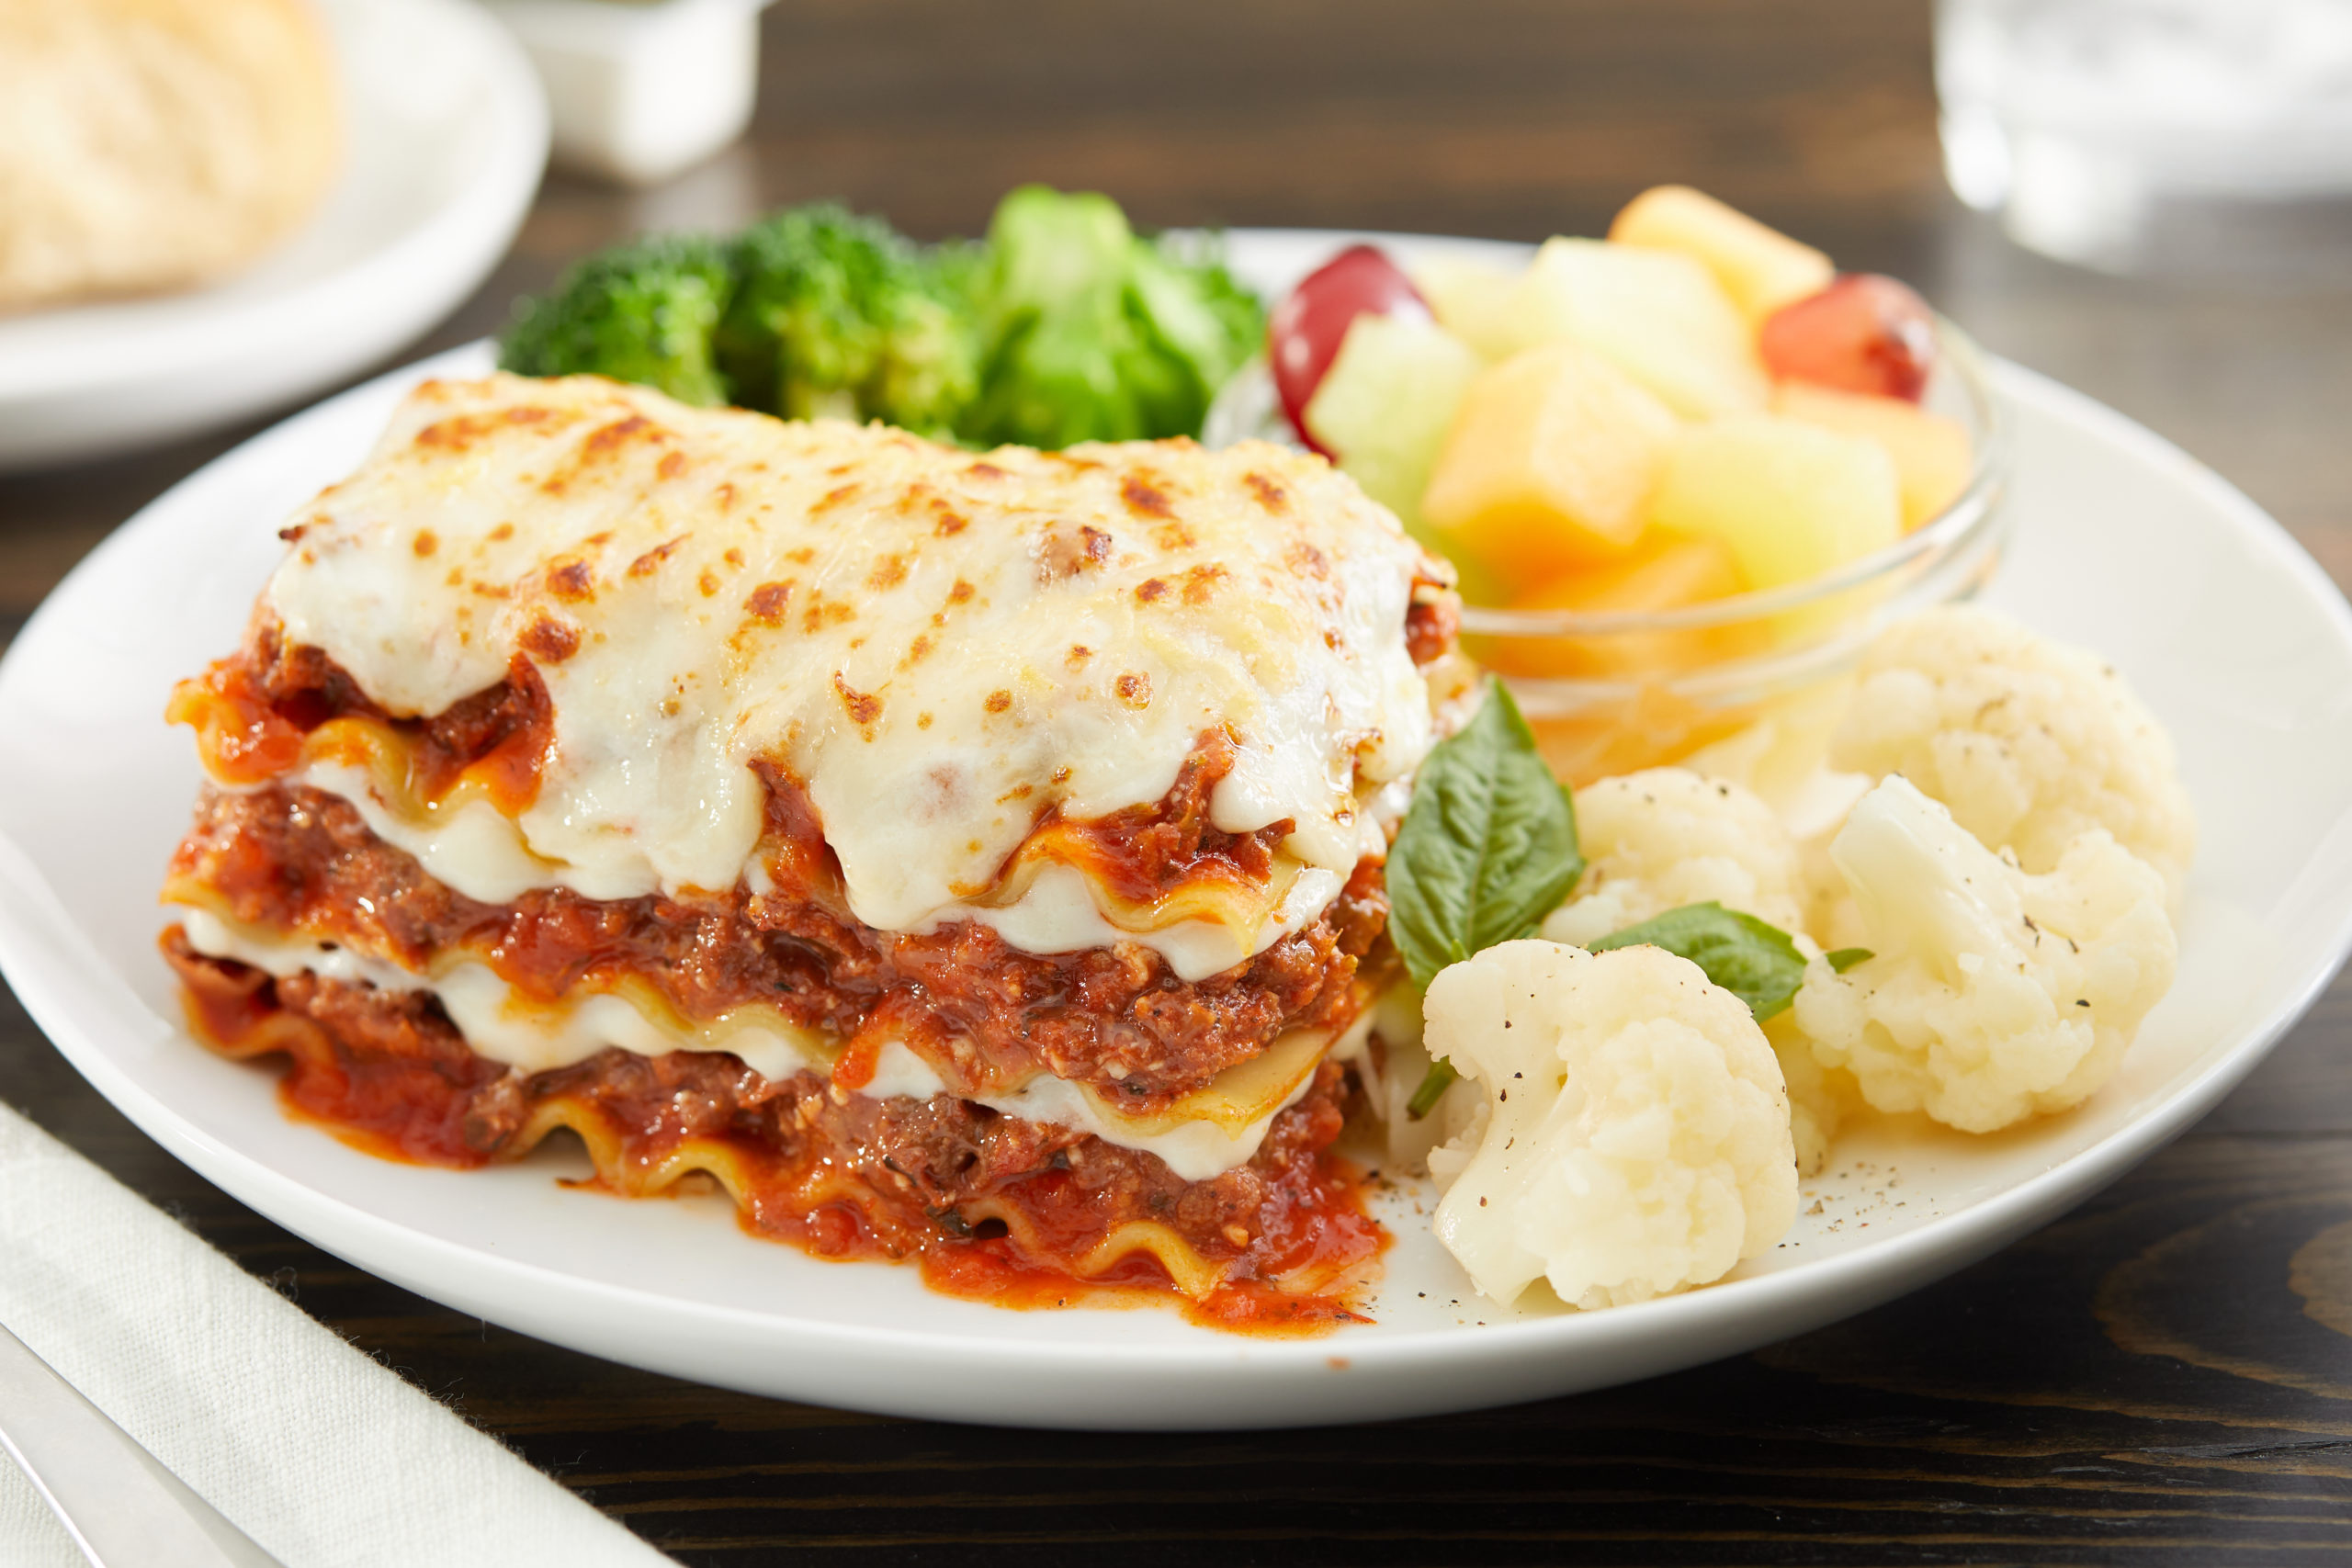 Lasagna meal with fruit and veggies